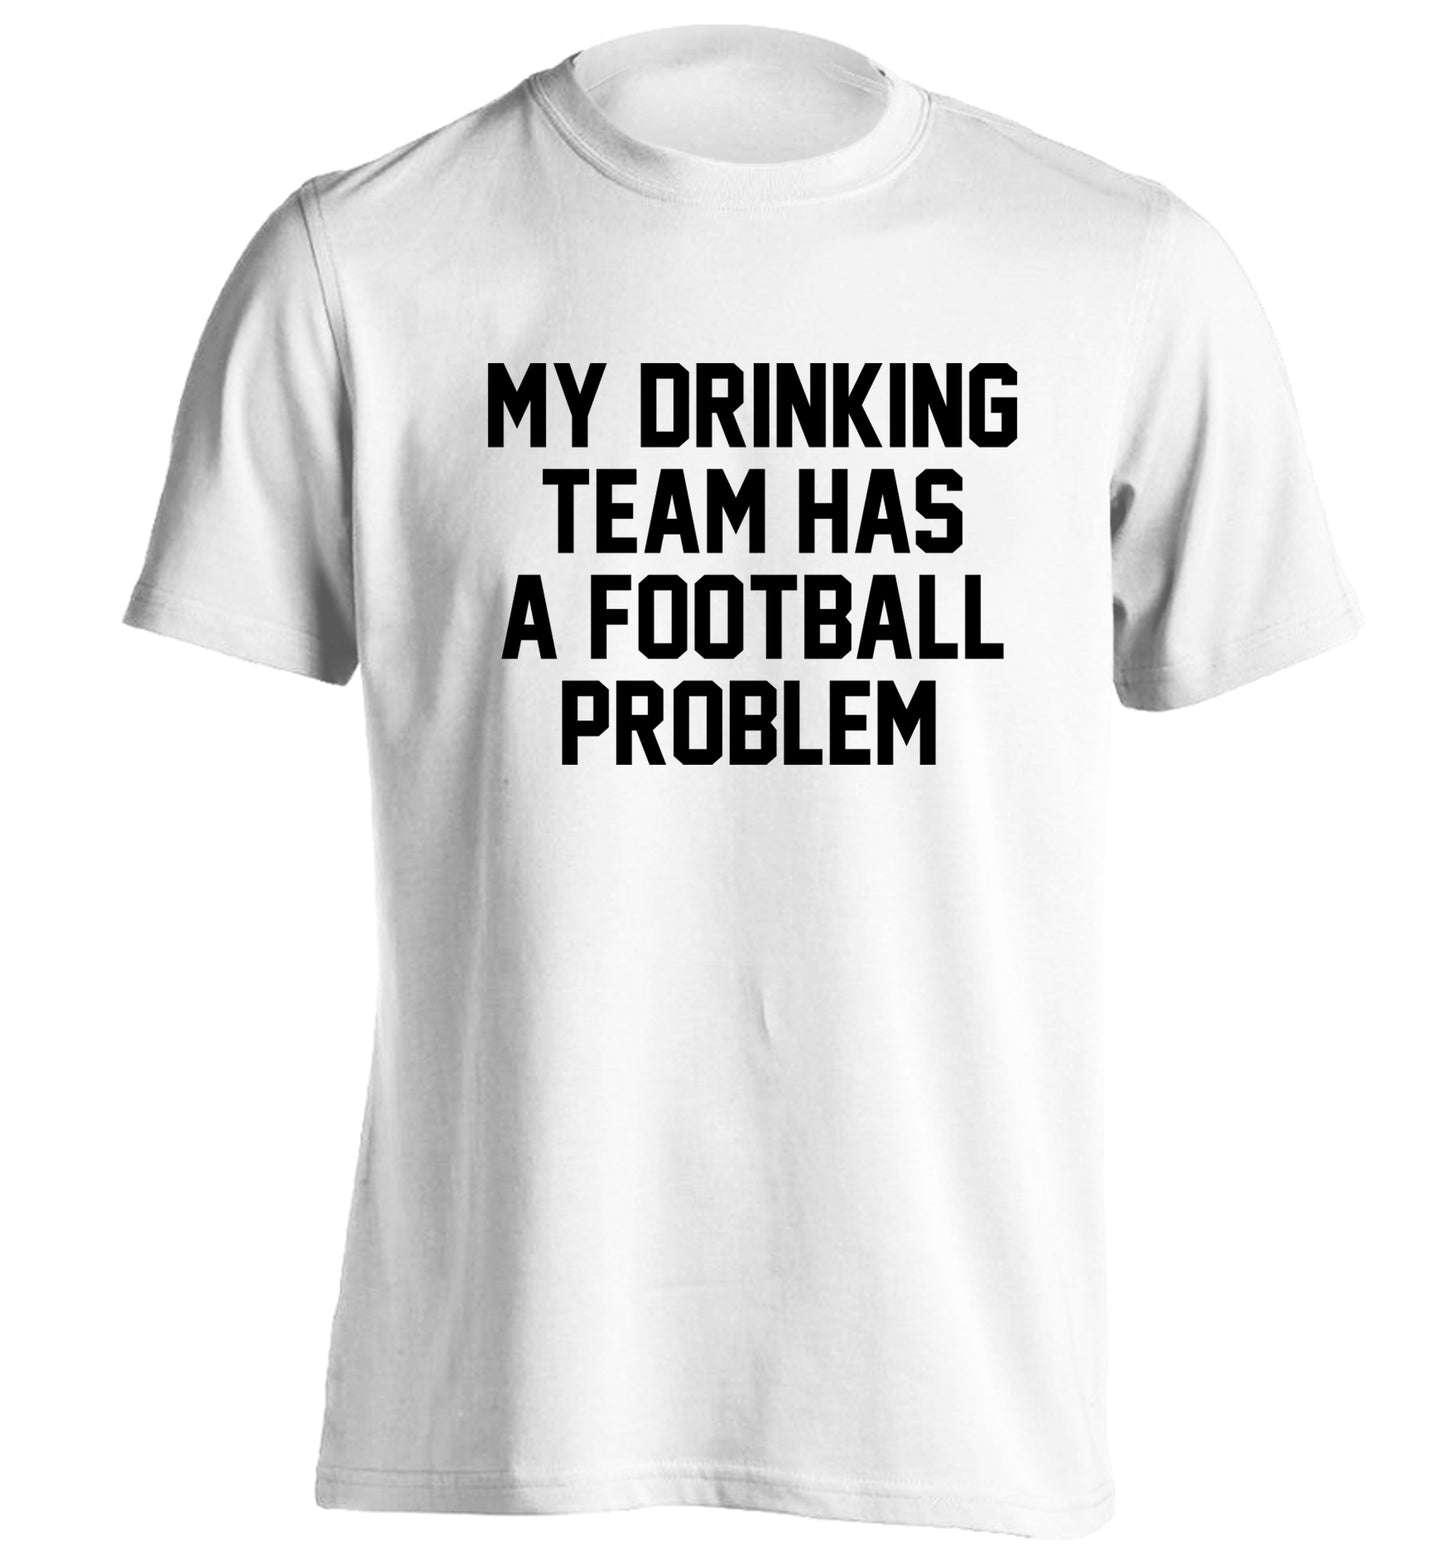 My drinking team has a football problem! adults unisexwhite Tshirt 2XL